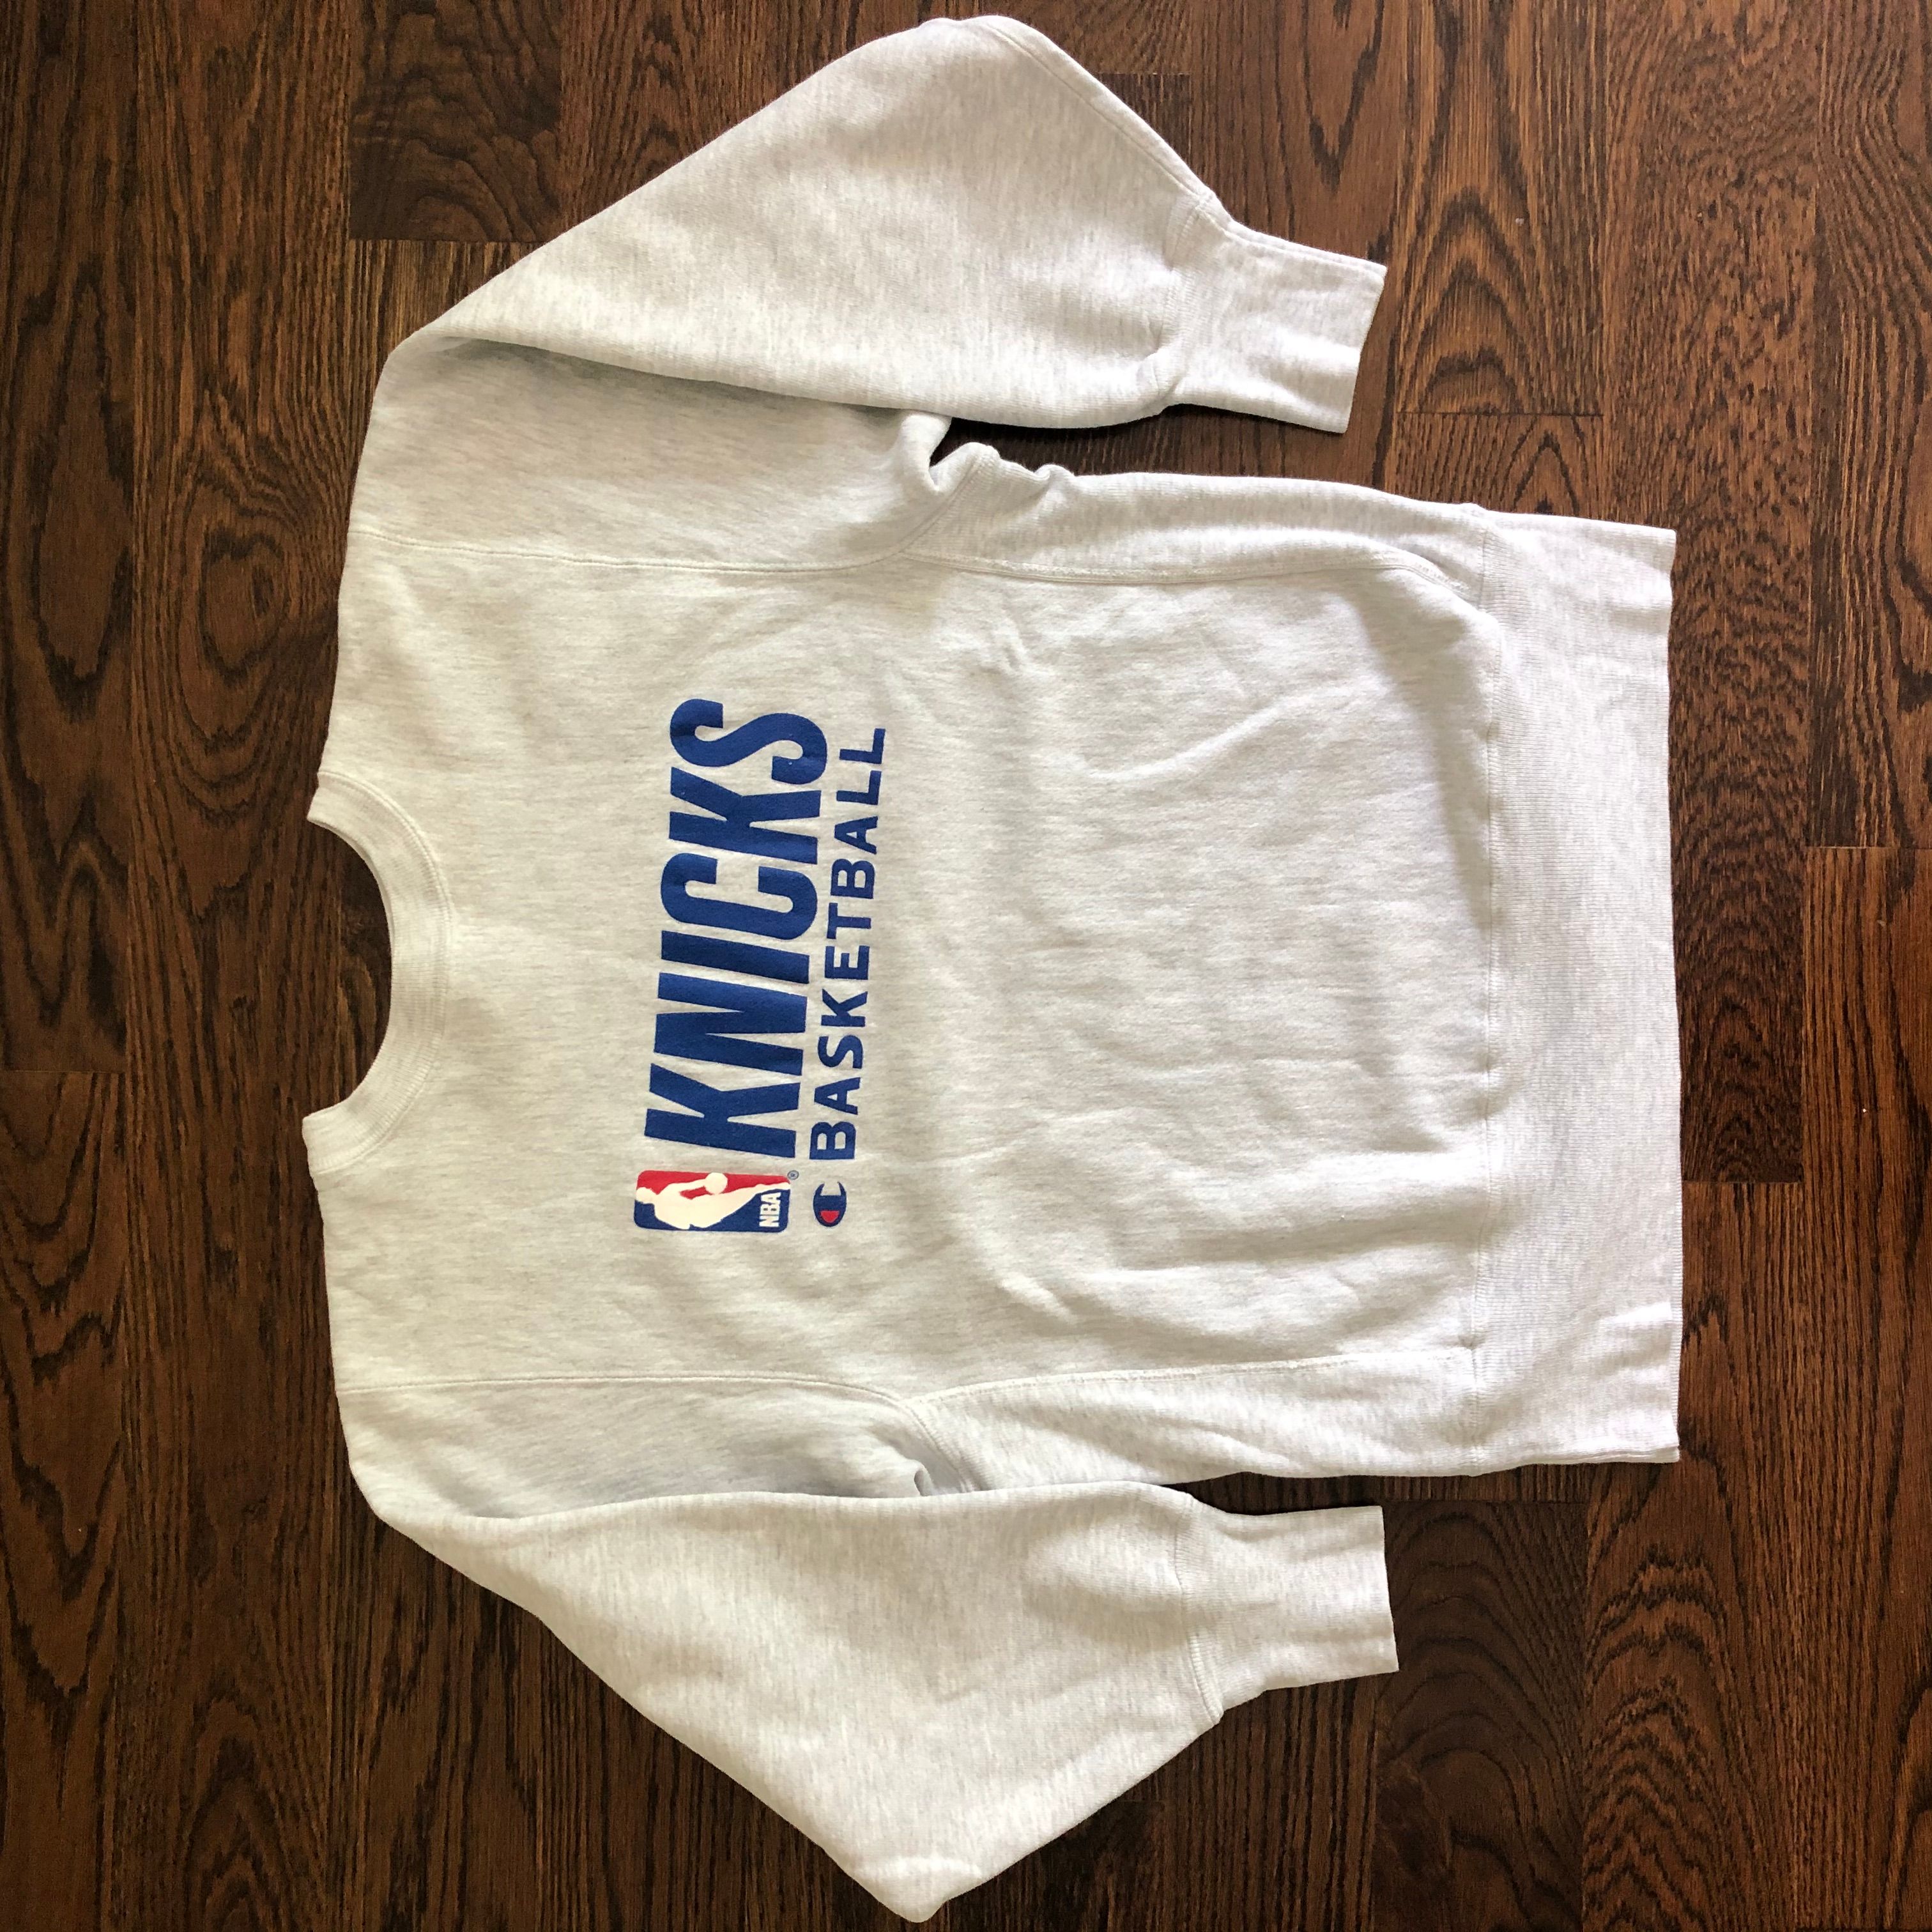 vintage 90s grey champion knicks basketball sweatshirt